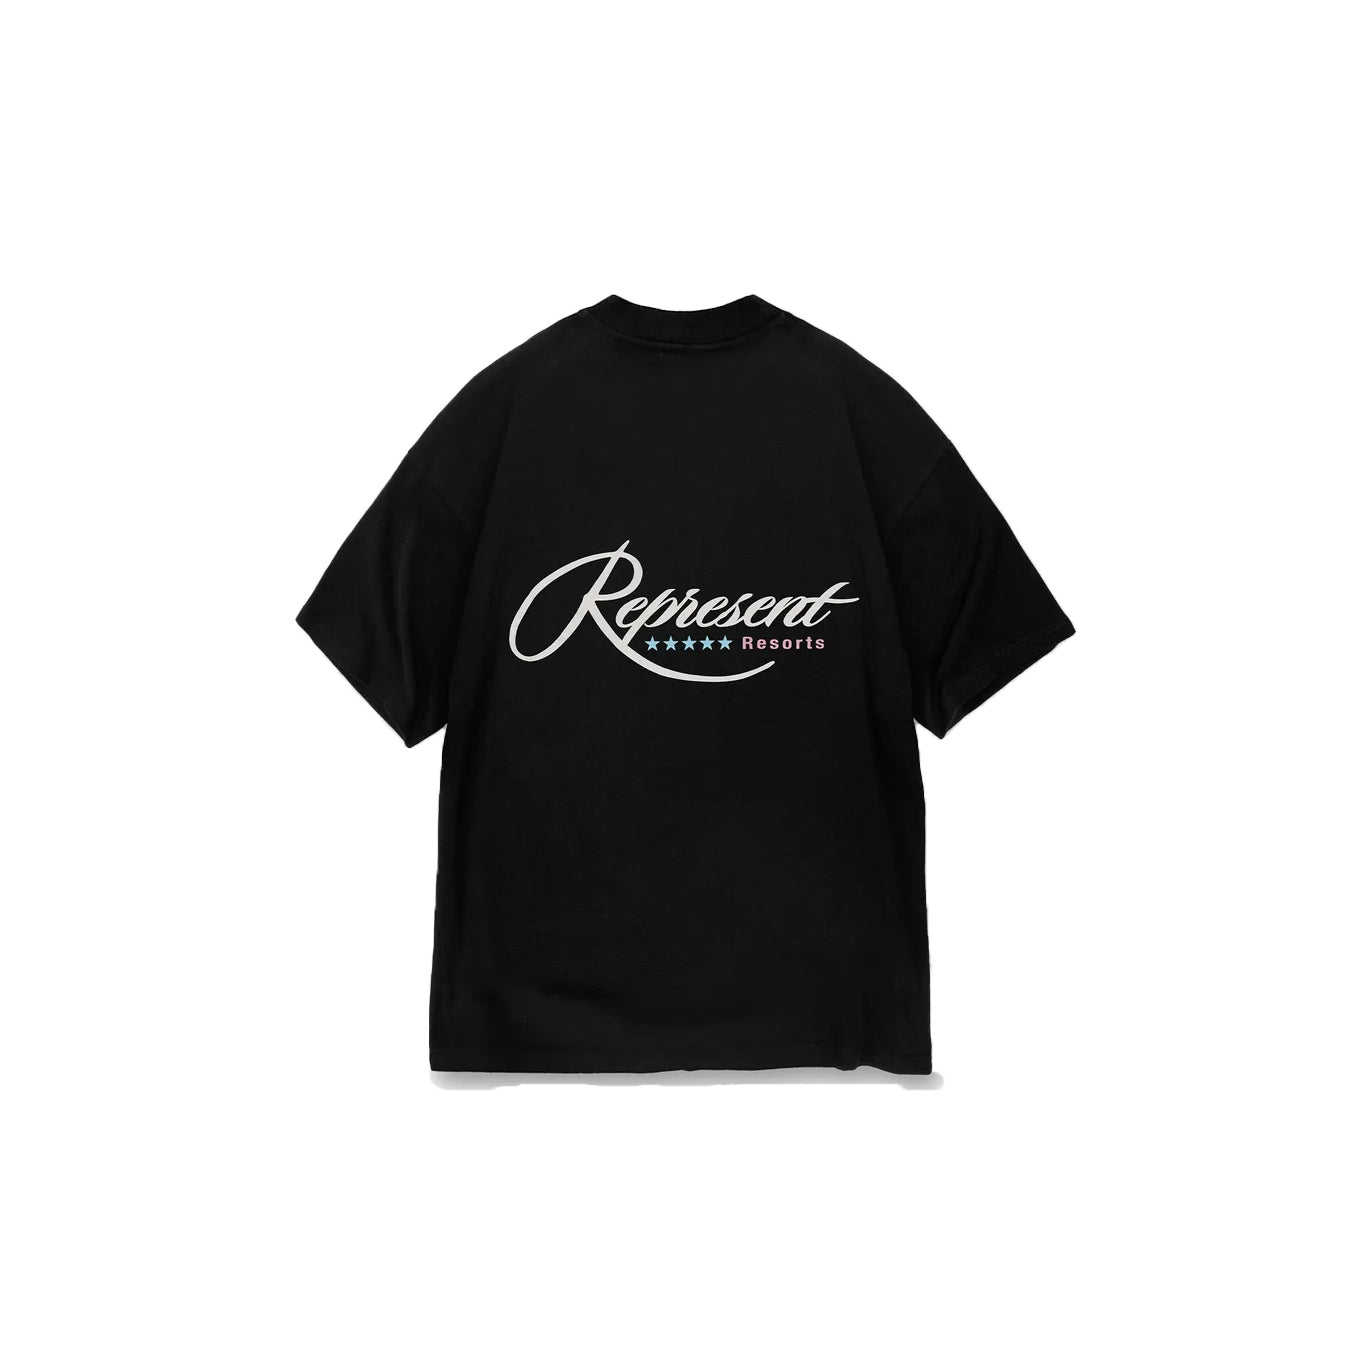 Represent Resort T-Shirt Black